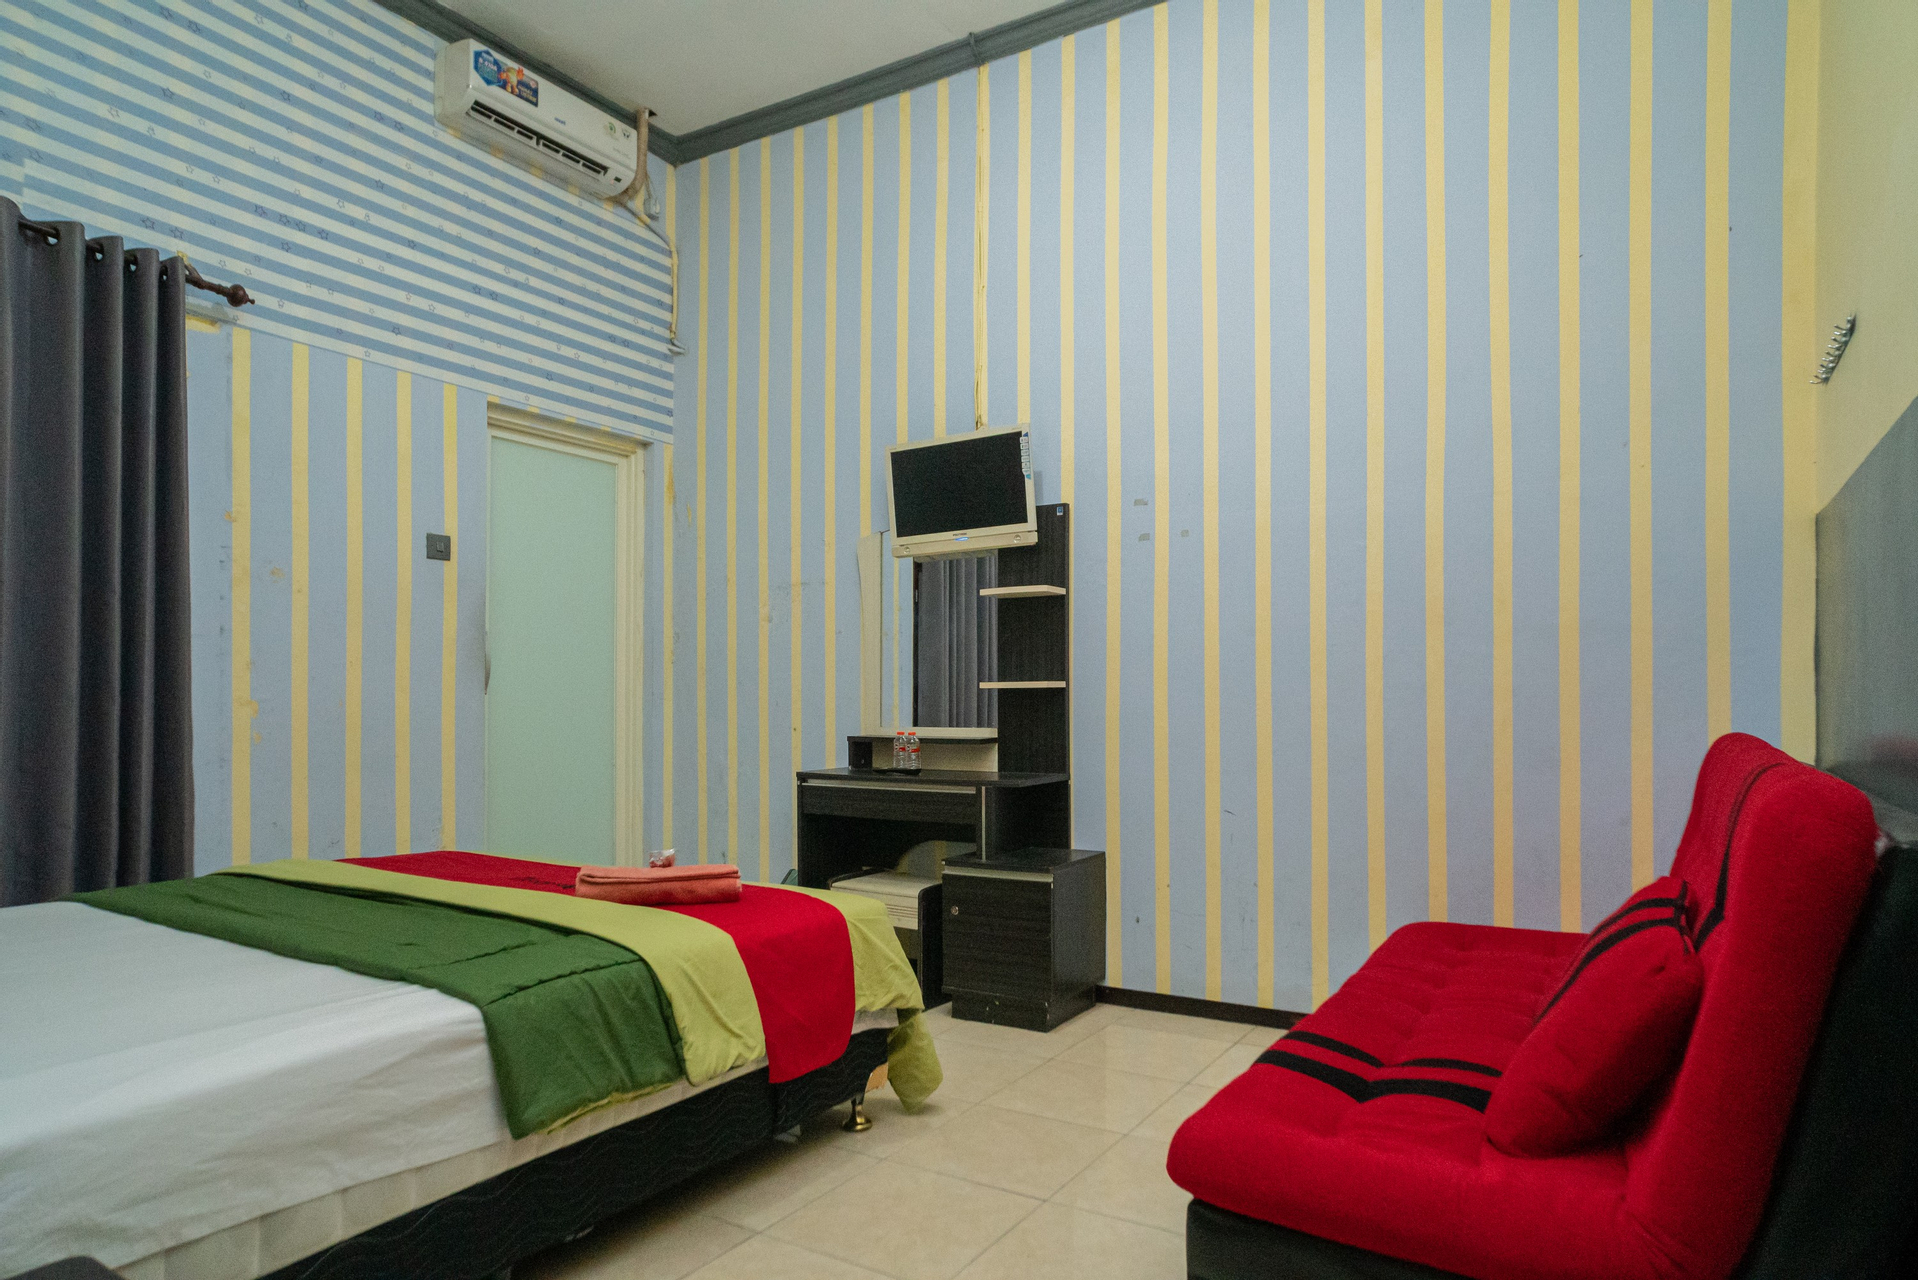 Bedroom 2, RedDoorz near Alun Alun Batu, Malang